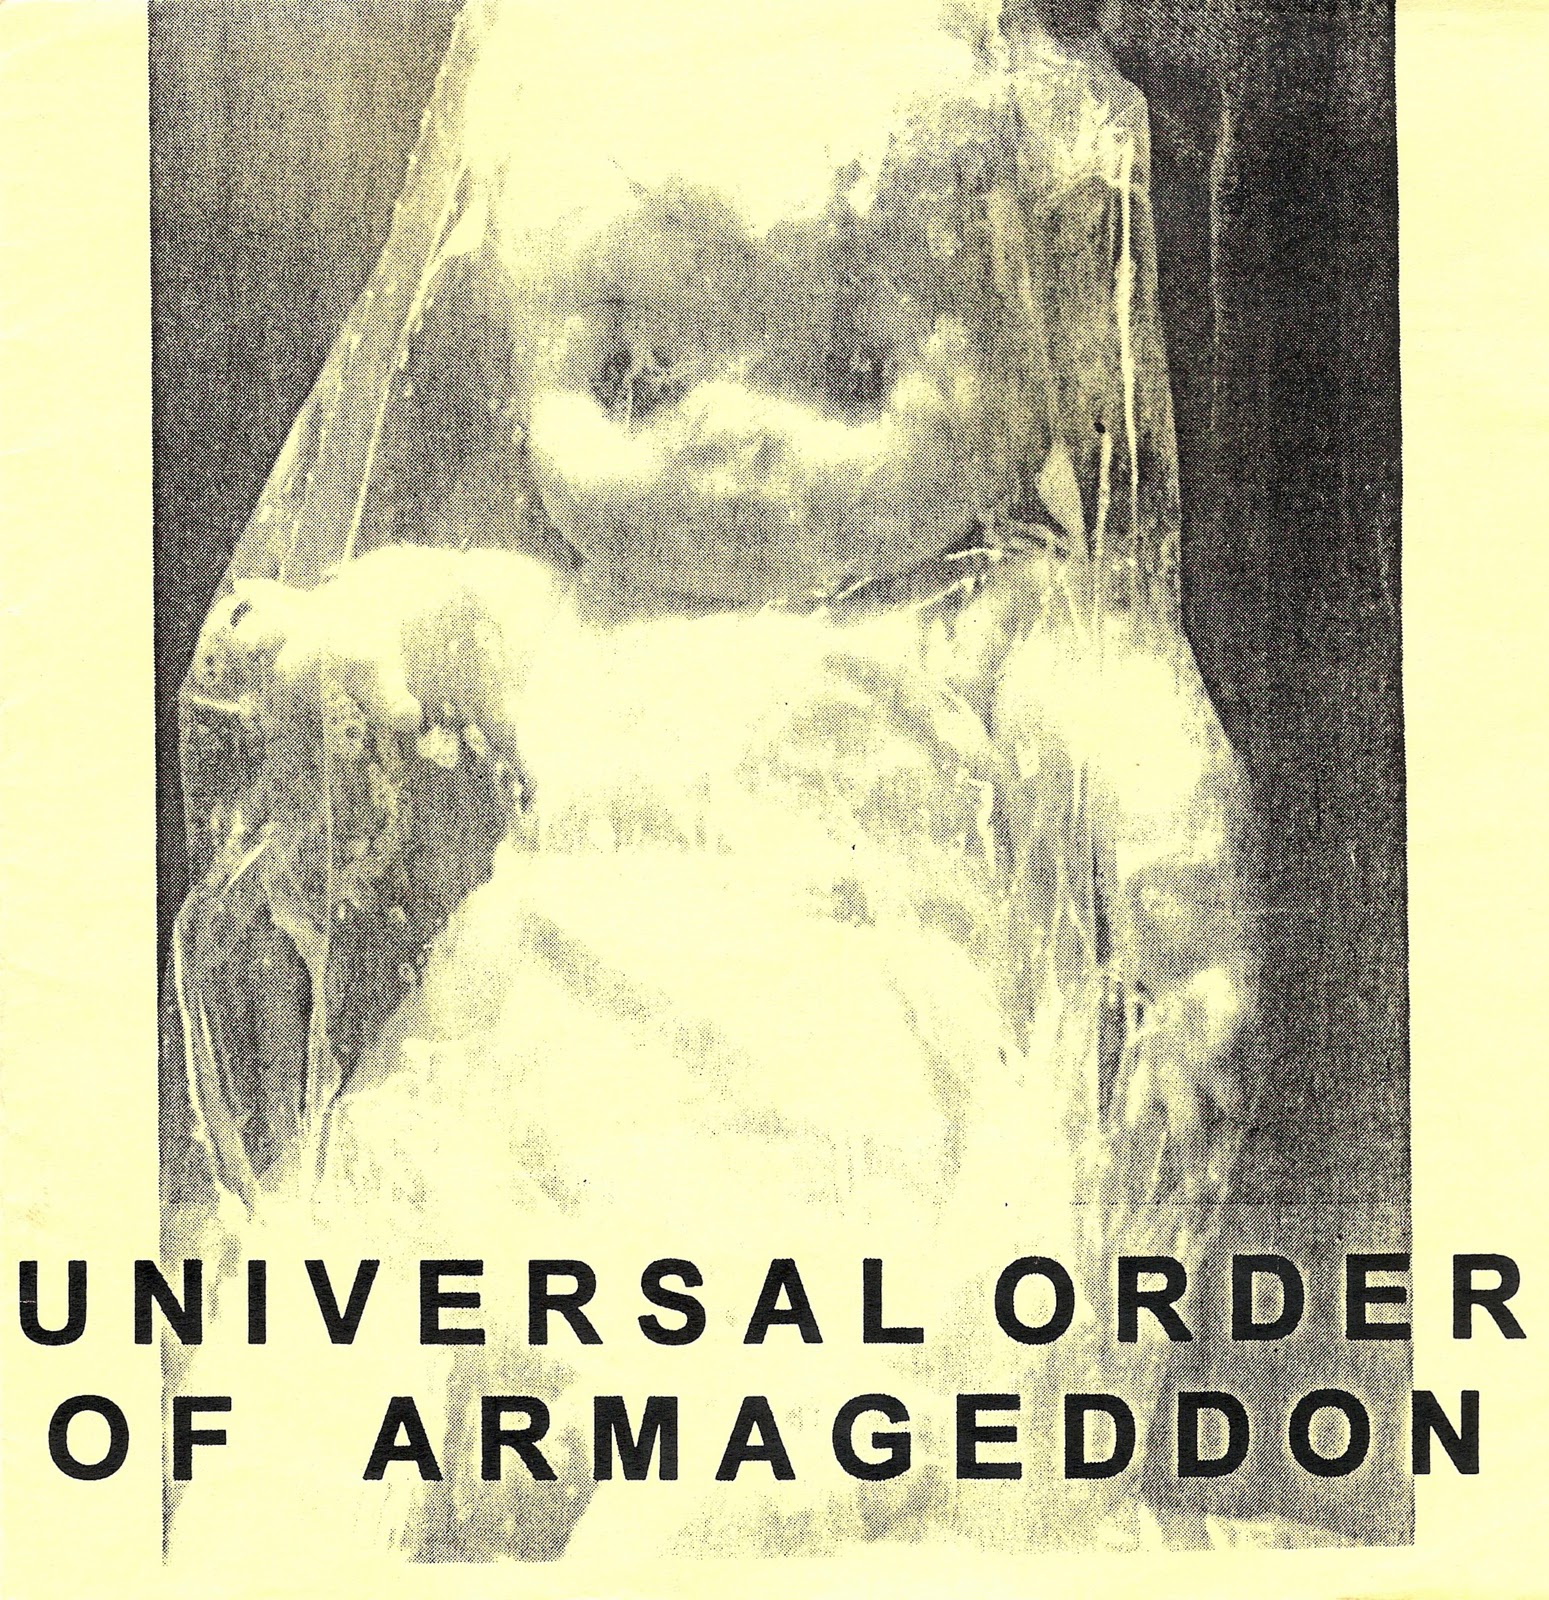 Pukekos: Universal Order of Armageddon